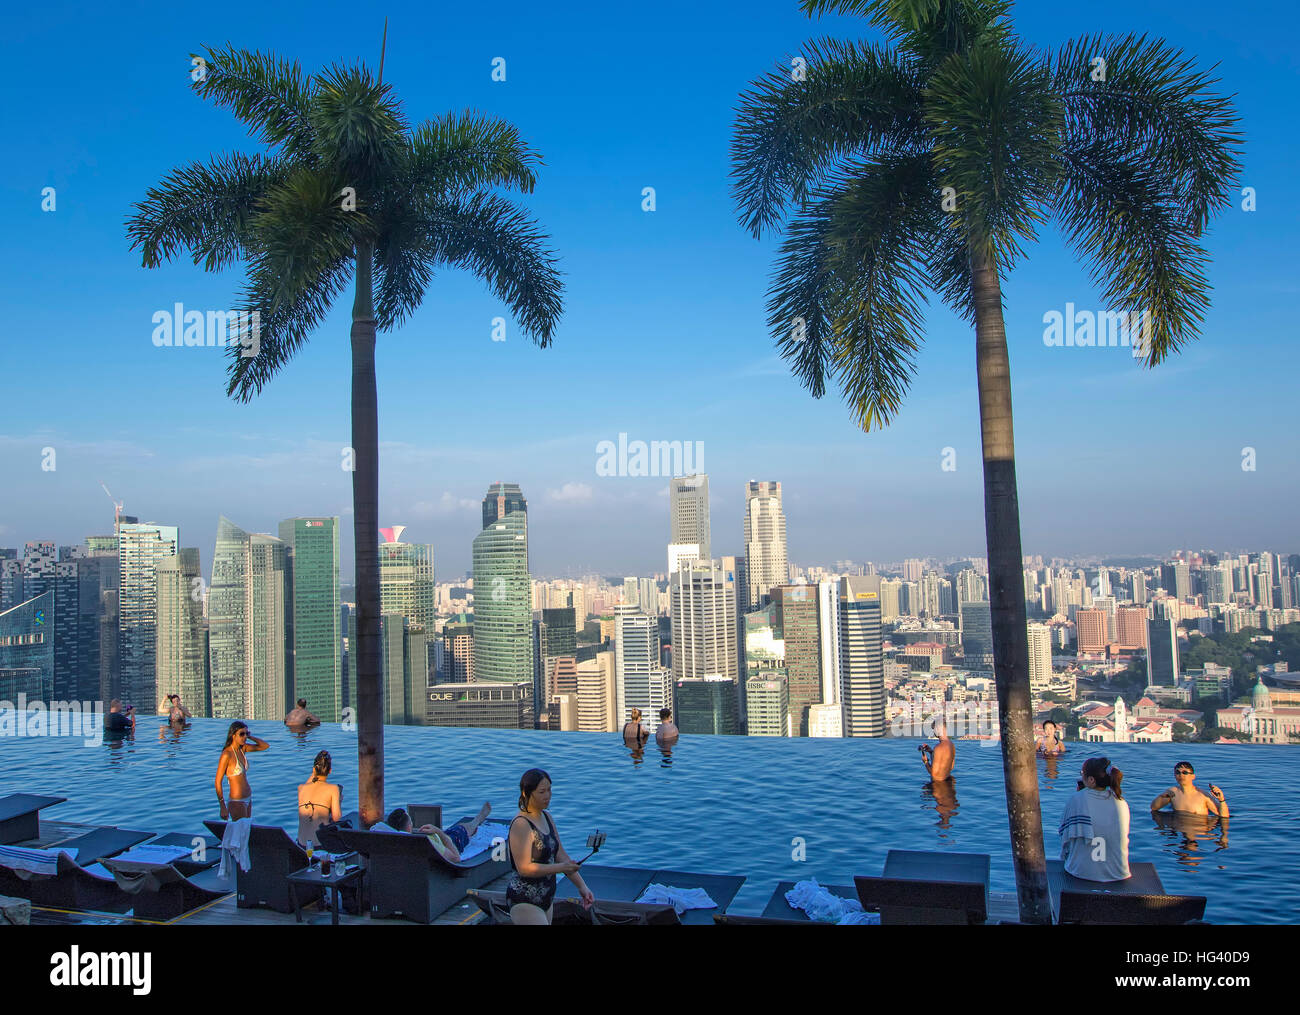 The swimming pool at the Marina Bay Sands SkyPark. Singapore Stock Photo